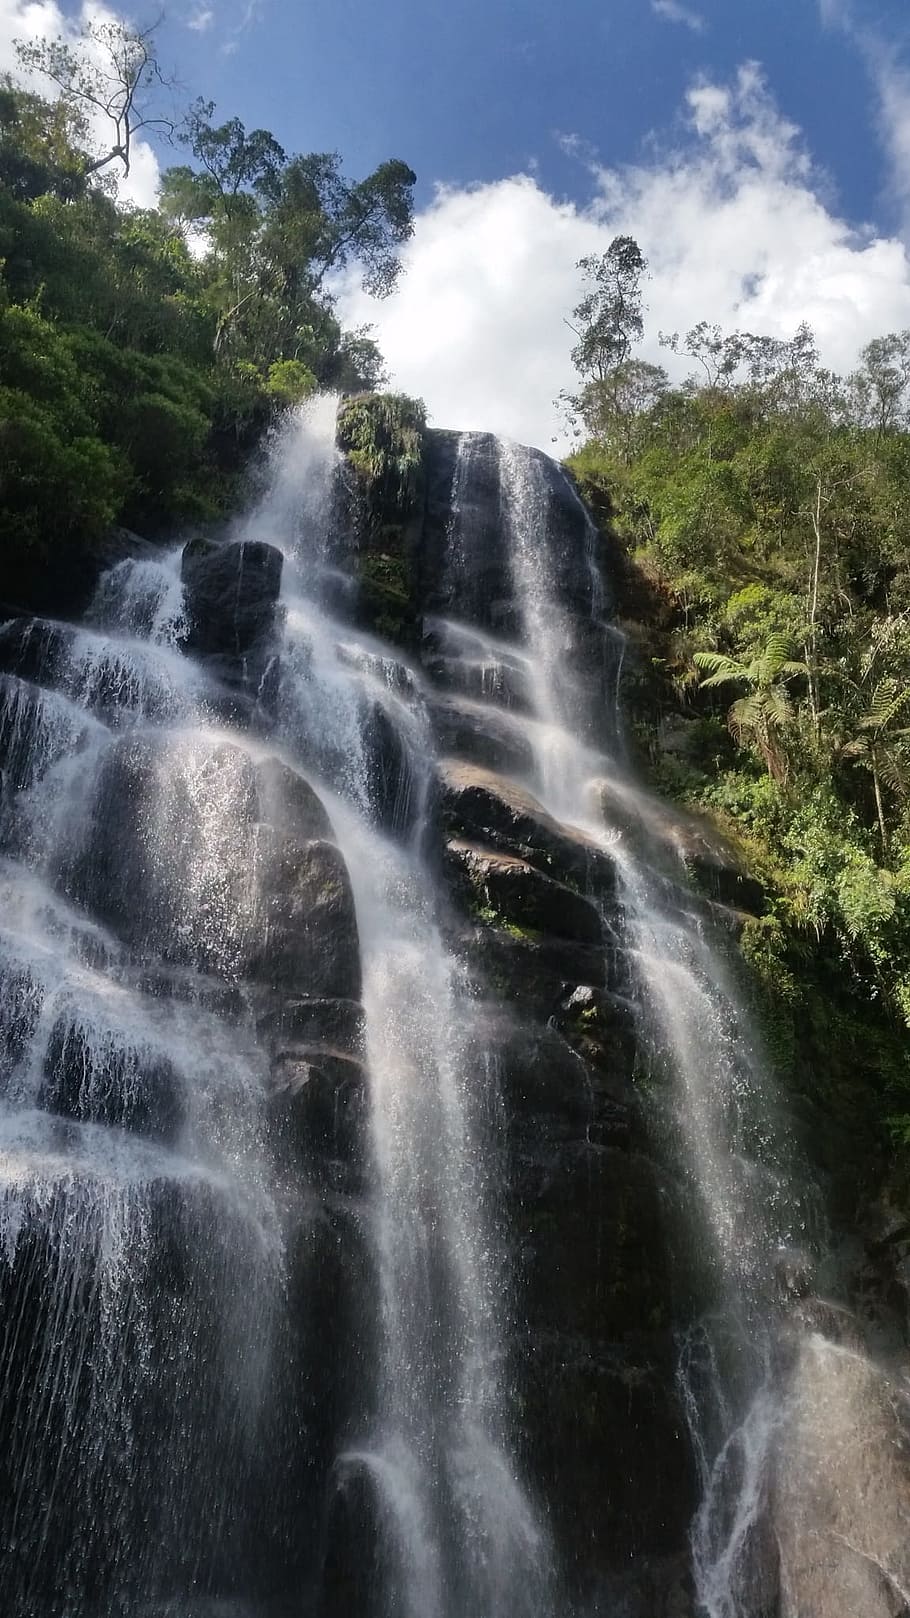 waterfall during daytime, Waterfall, Nature, Blue Sky, Day, Stone, agua, meditation, serra, cascade